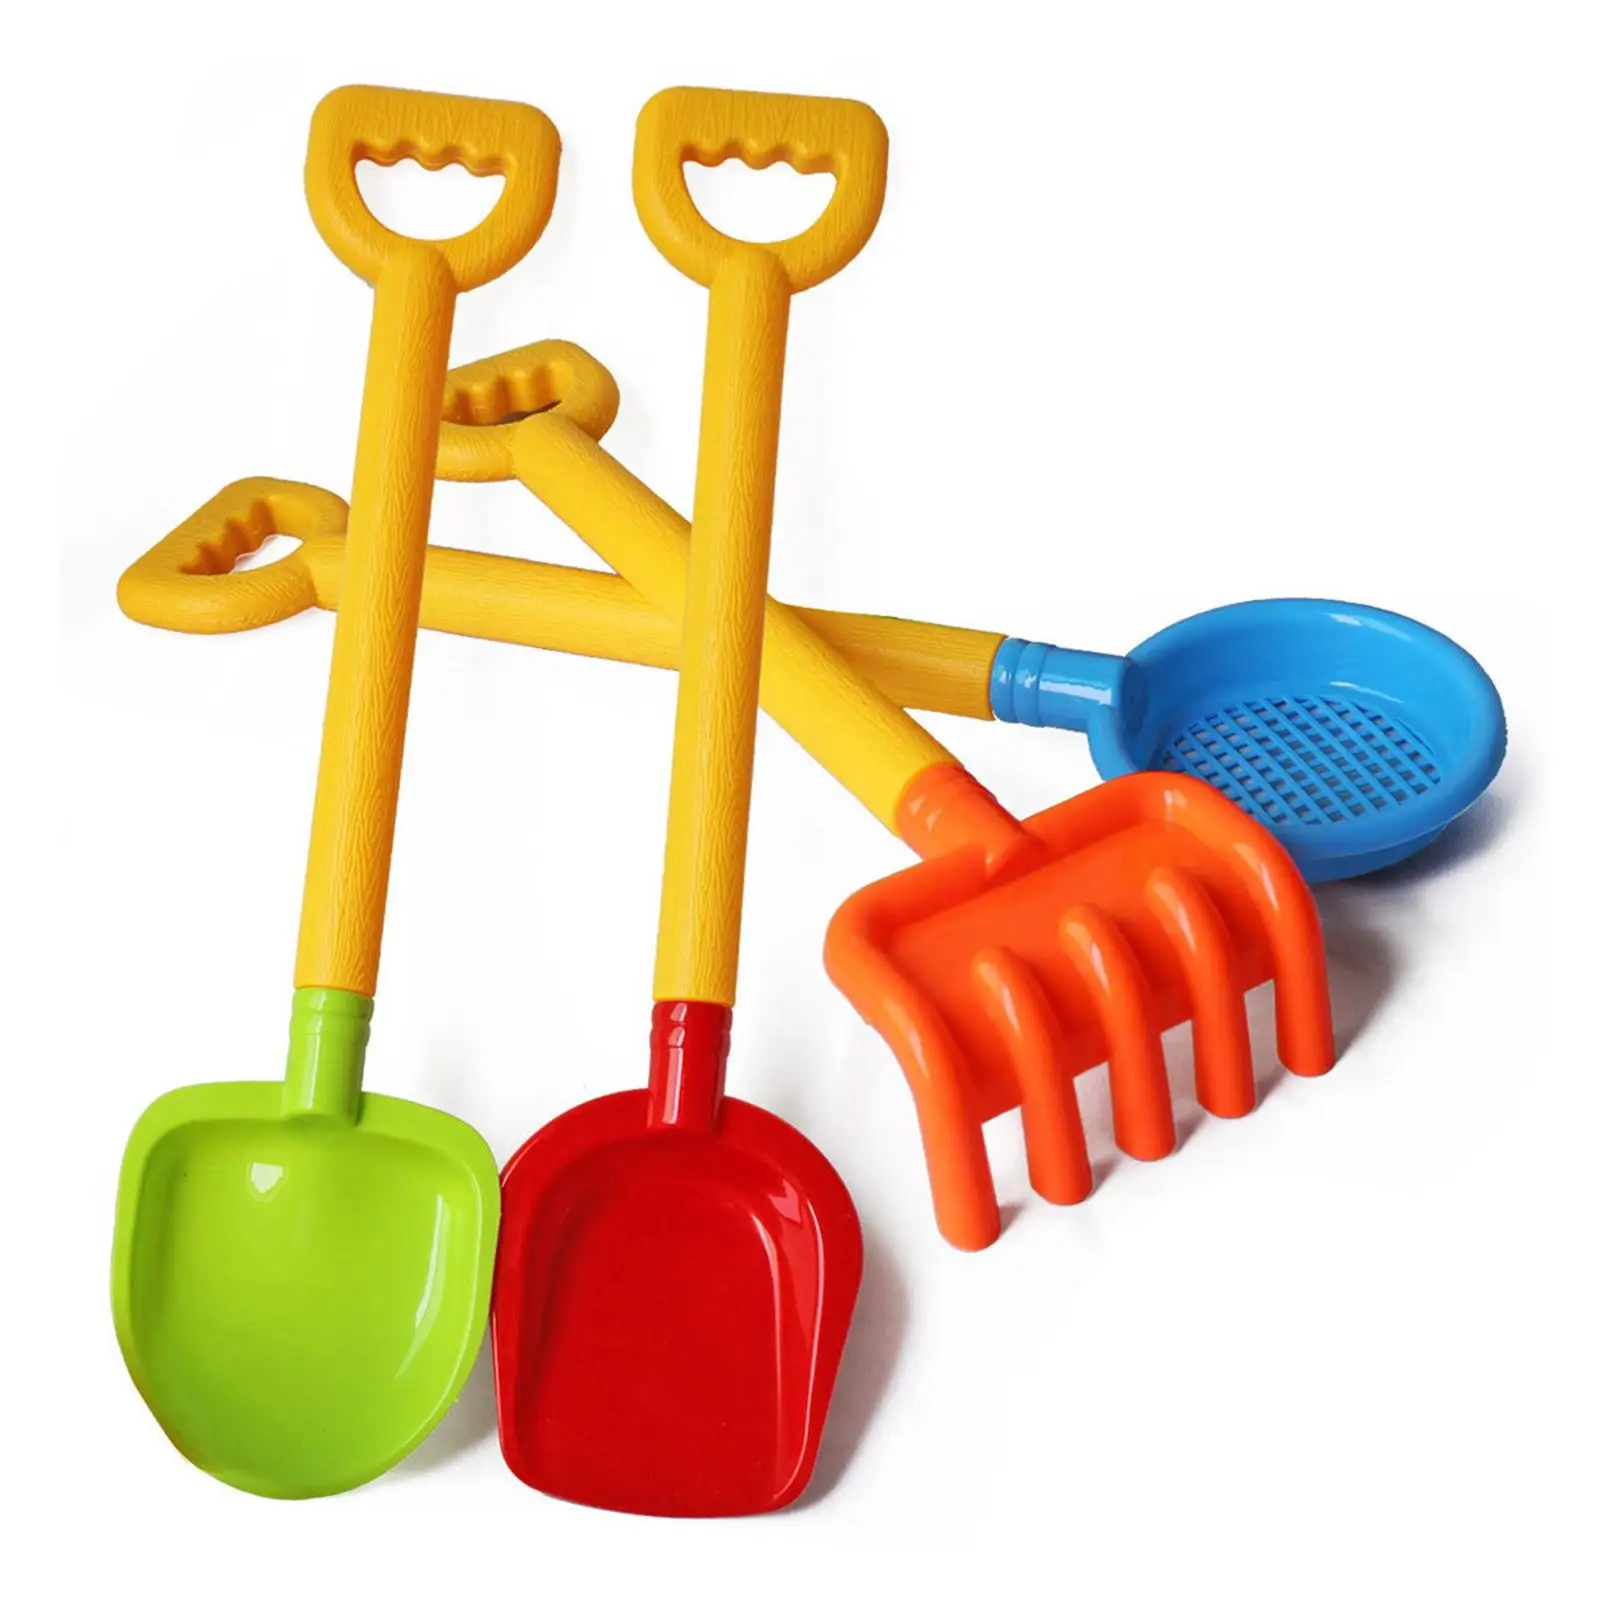 TOYANDONA 2 Sets Kids Gardening Tools Sand Toys Rake and Shovel for Children Beach Sandbox Toy 